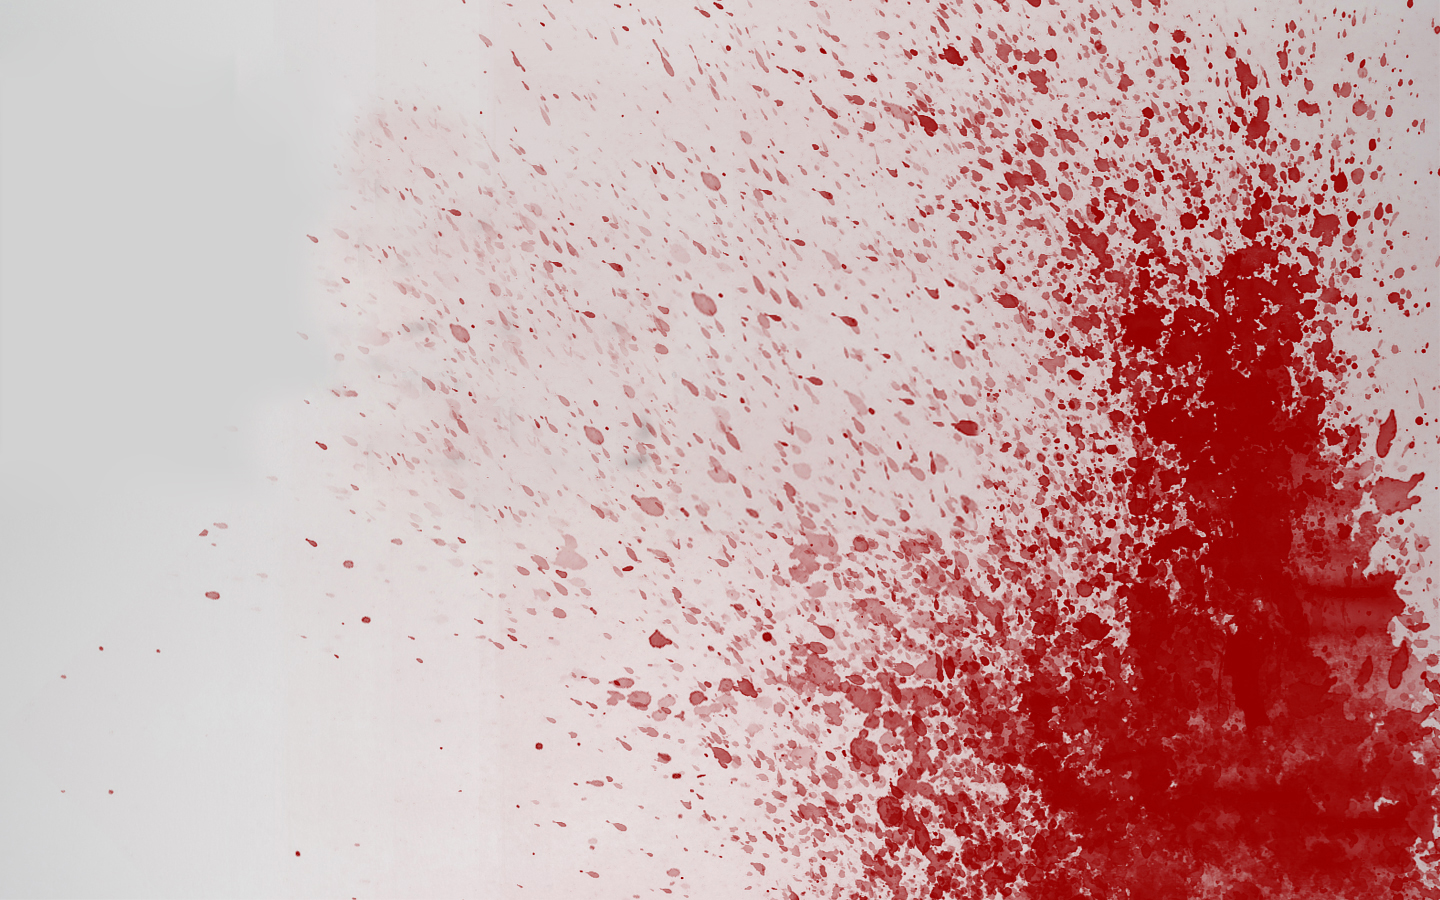 Find more blood splatter wallpapers backgrounds for powerpointjpg Real Horr...